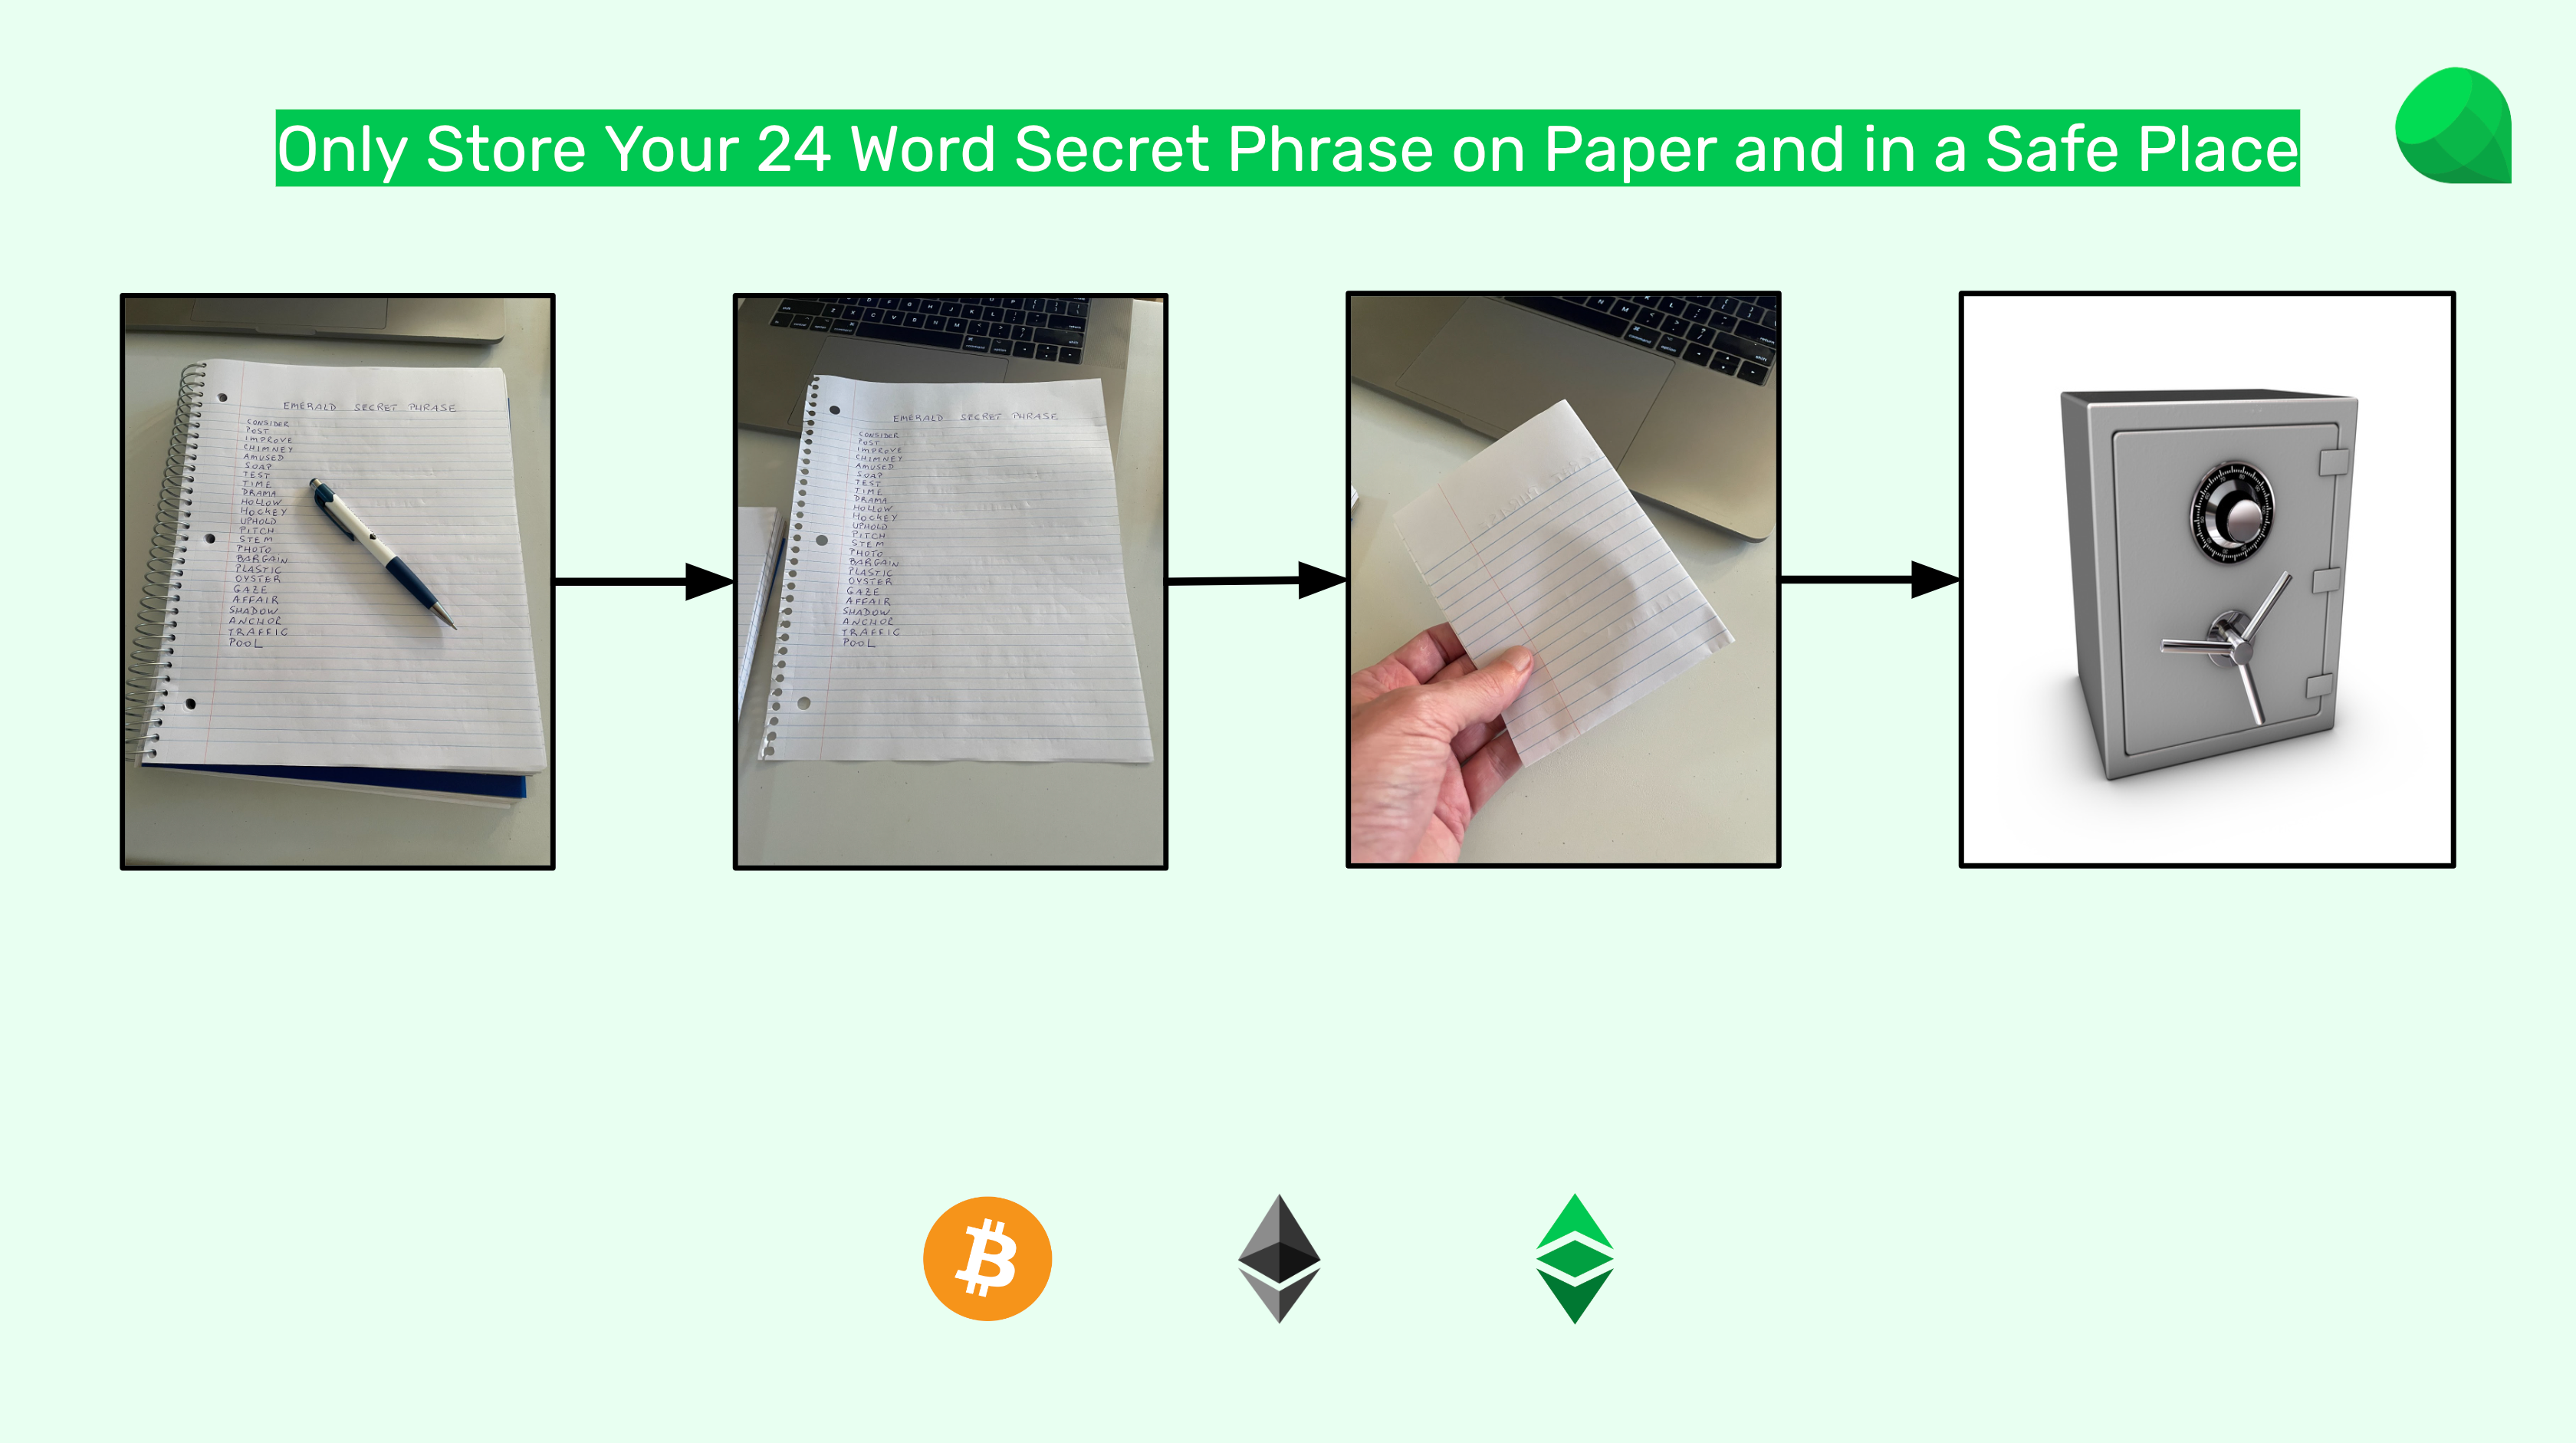 Store your secret phrase on paper.